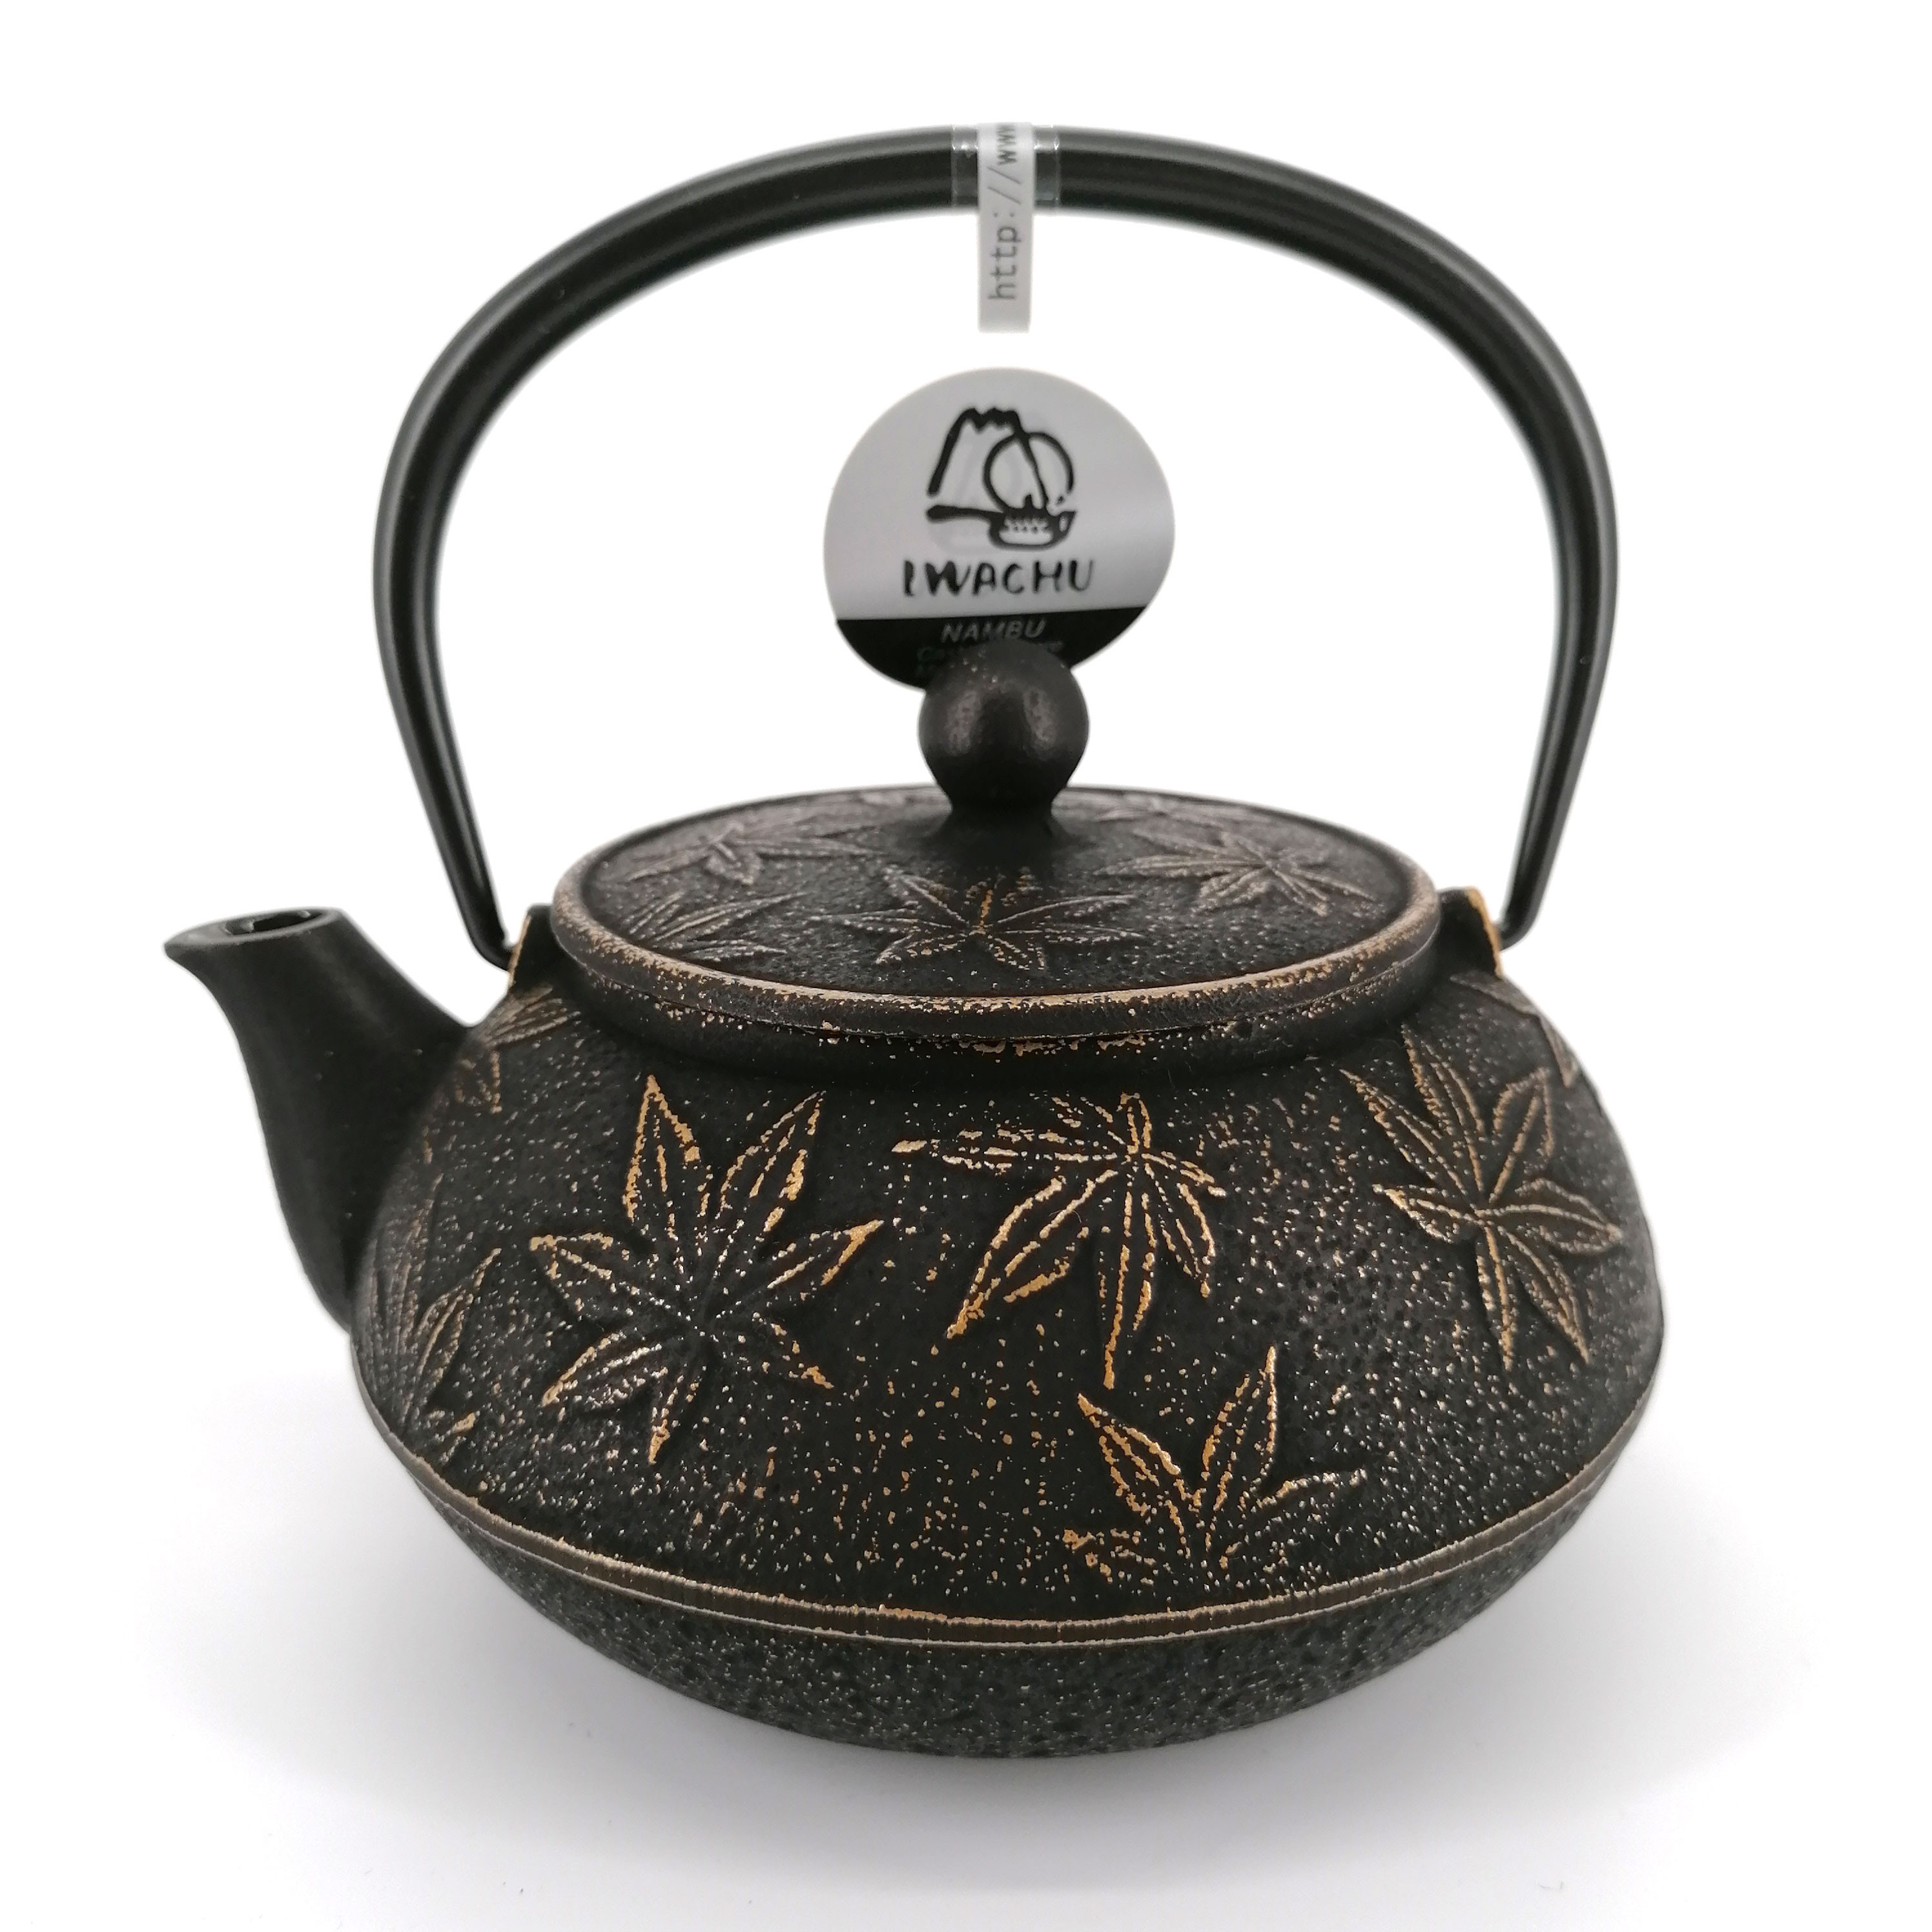 https://kyotoboutique.fr/55604/japanese-cast-iron-teapot-iwachu-kaede-065-lt-black-gold.jpg